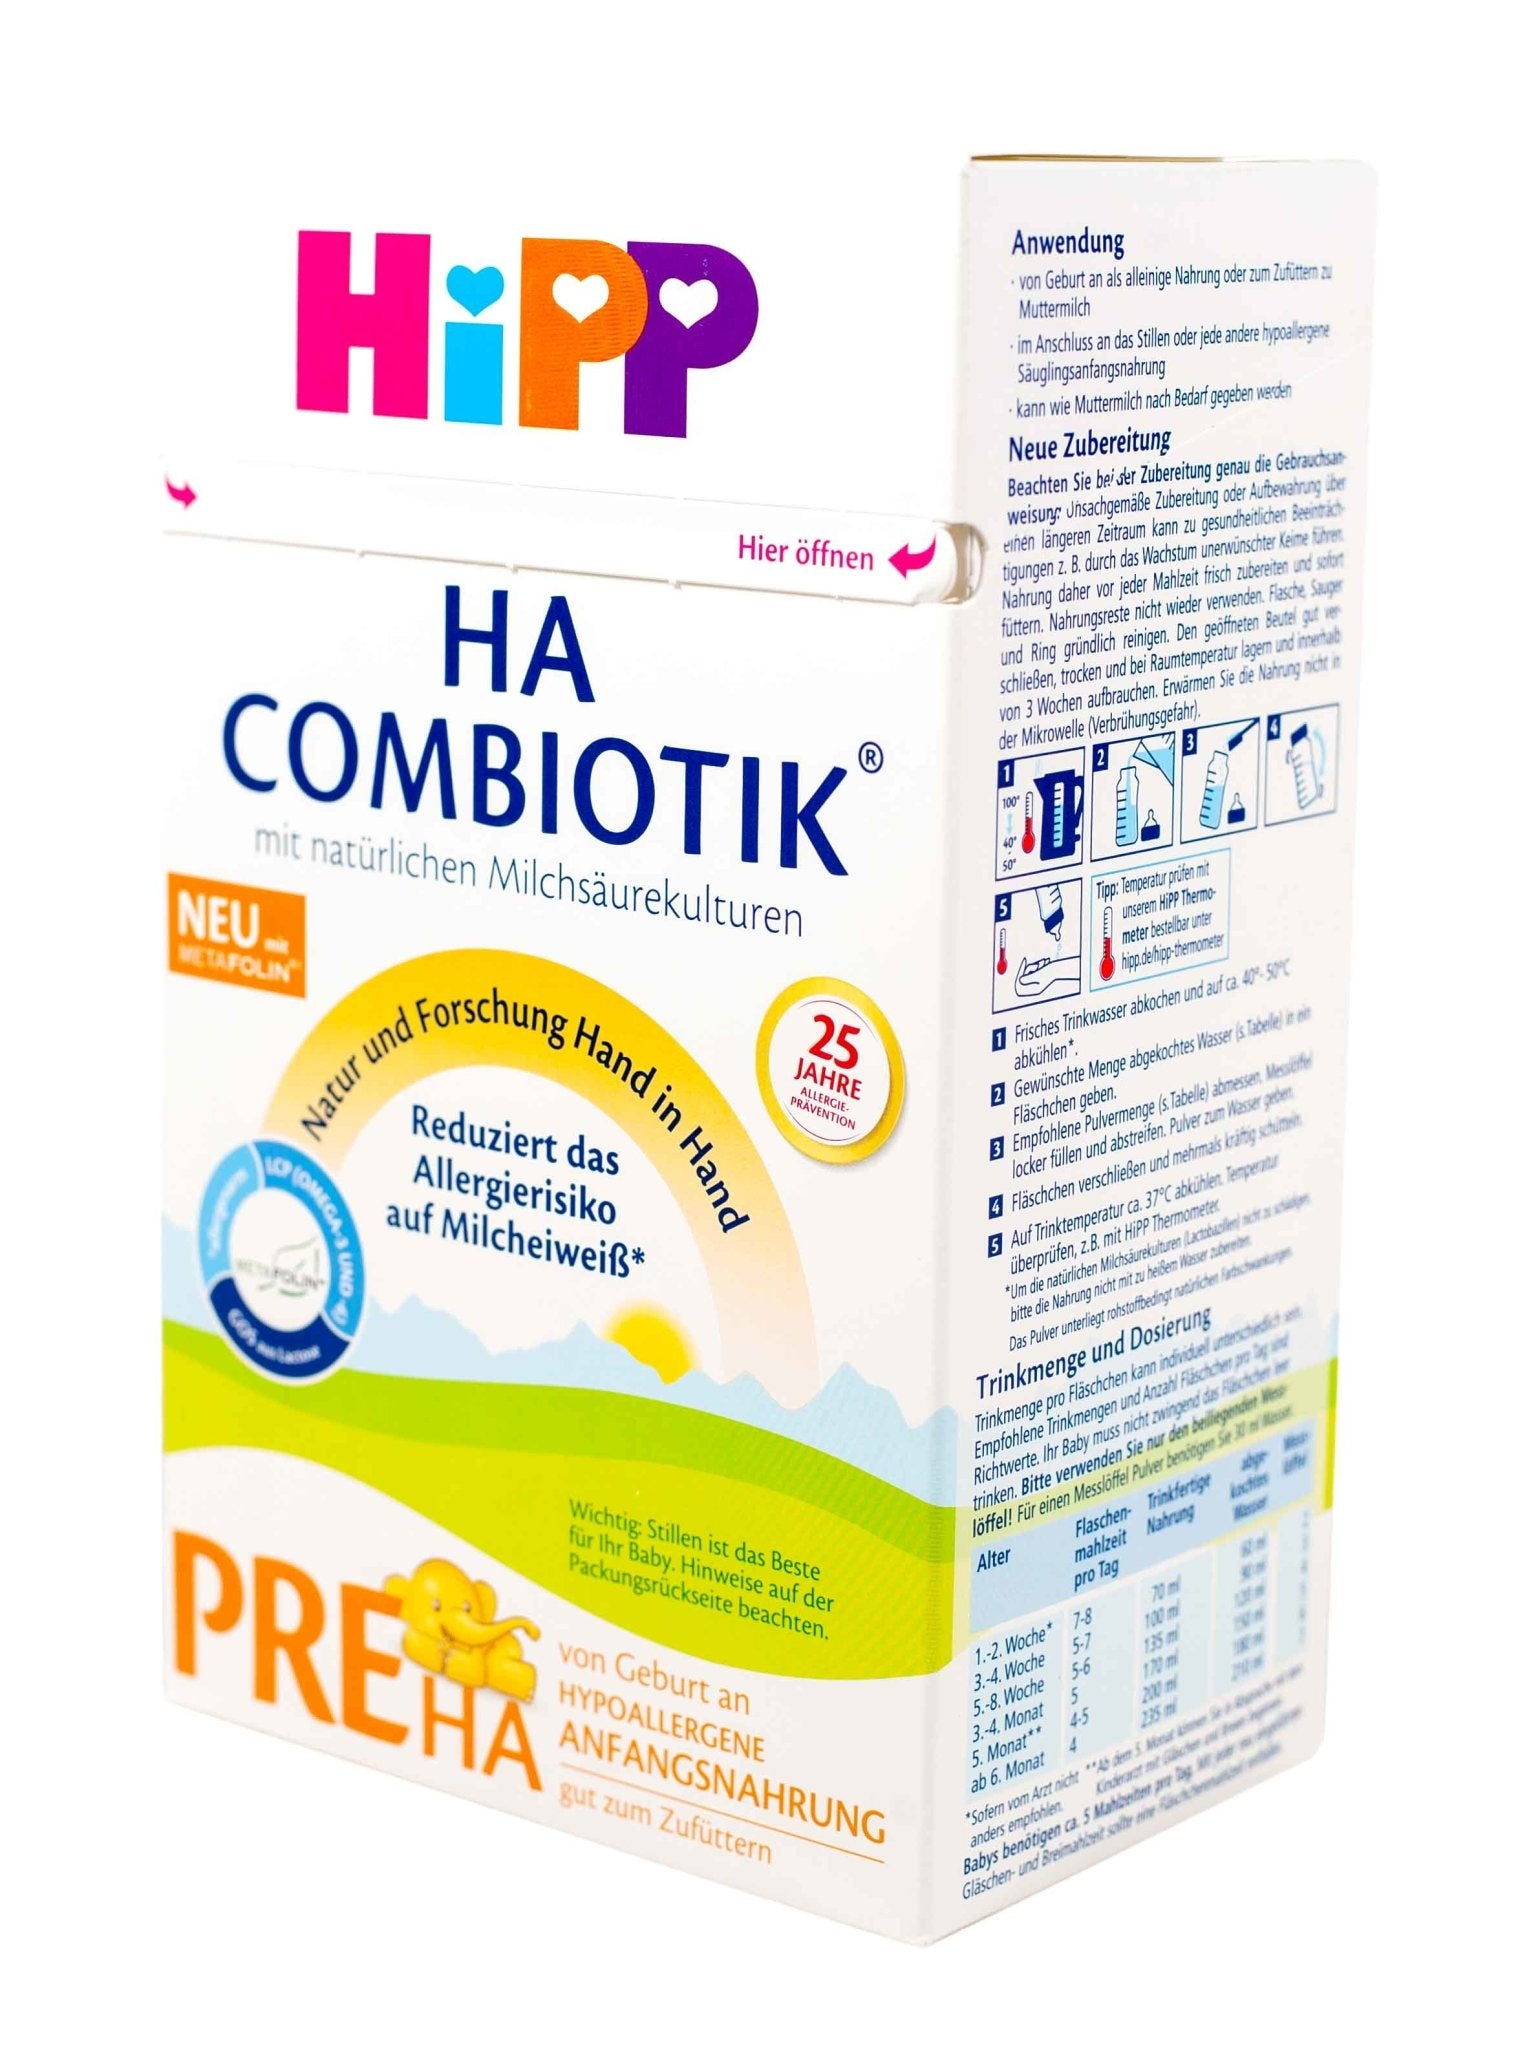 HiPP HA (Hydrolyzed) (600g) PRE Infant Formula - The Milky Box